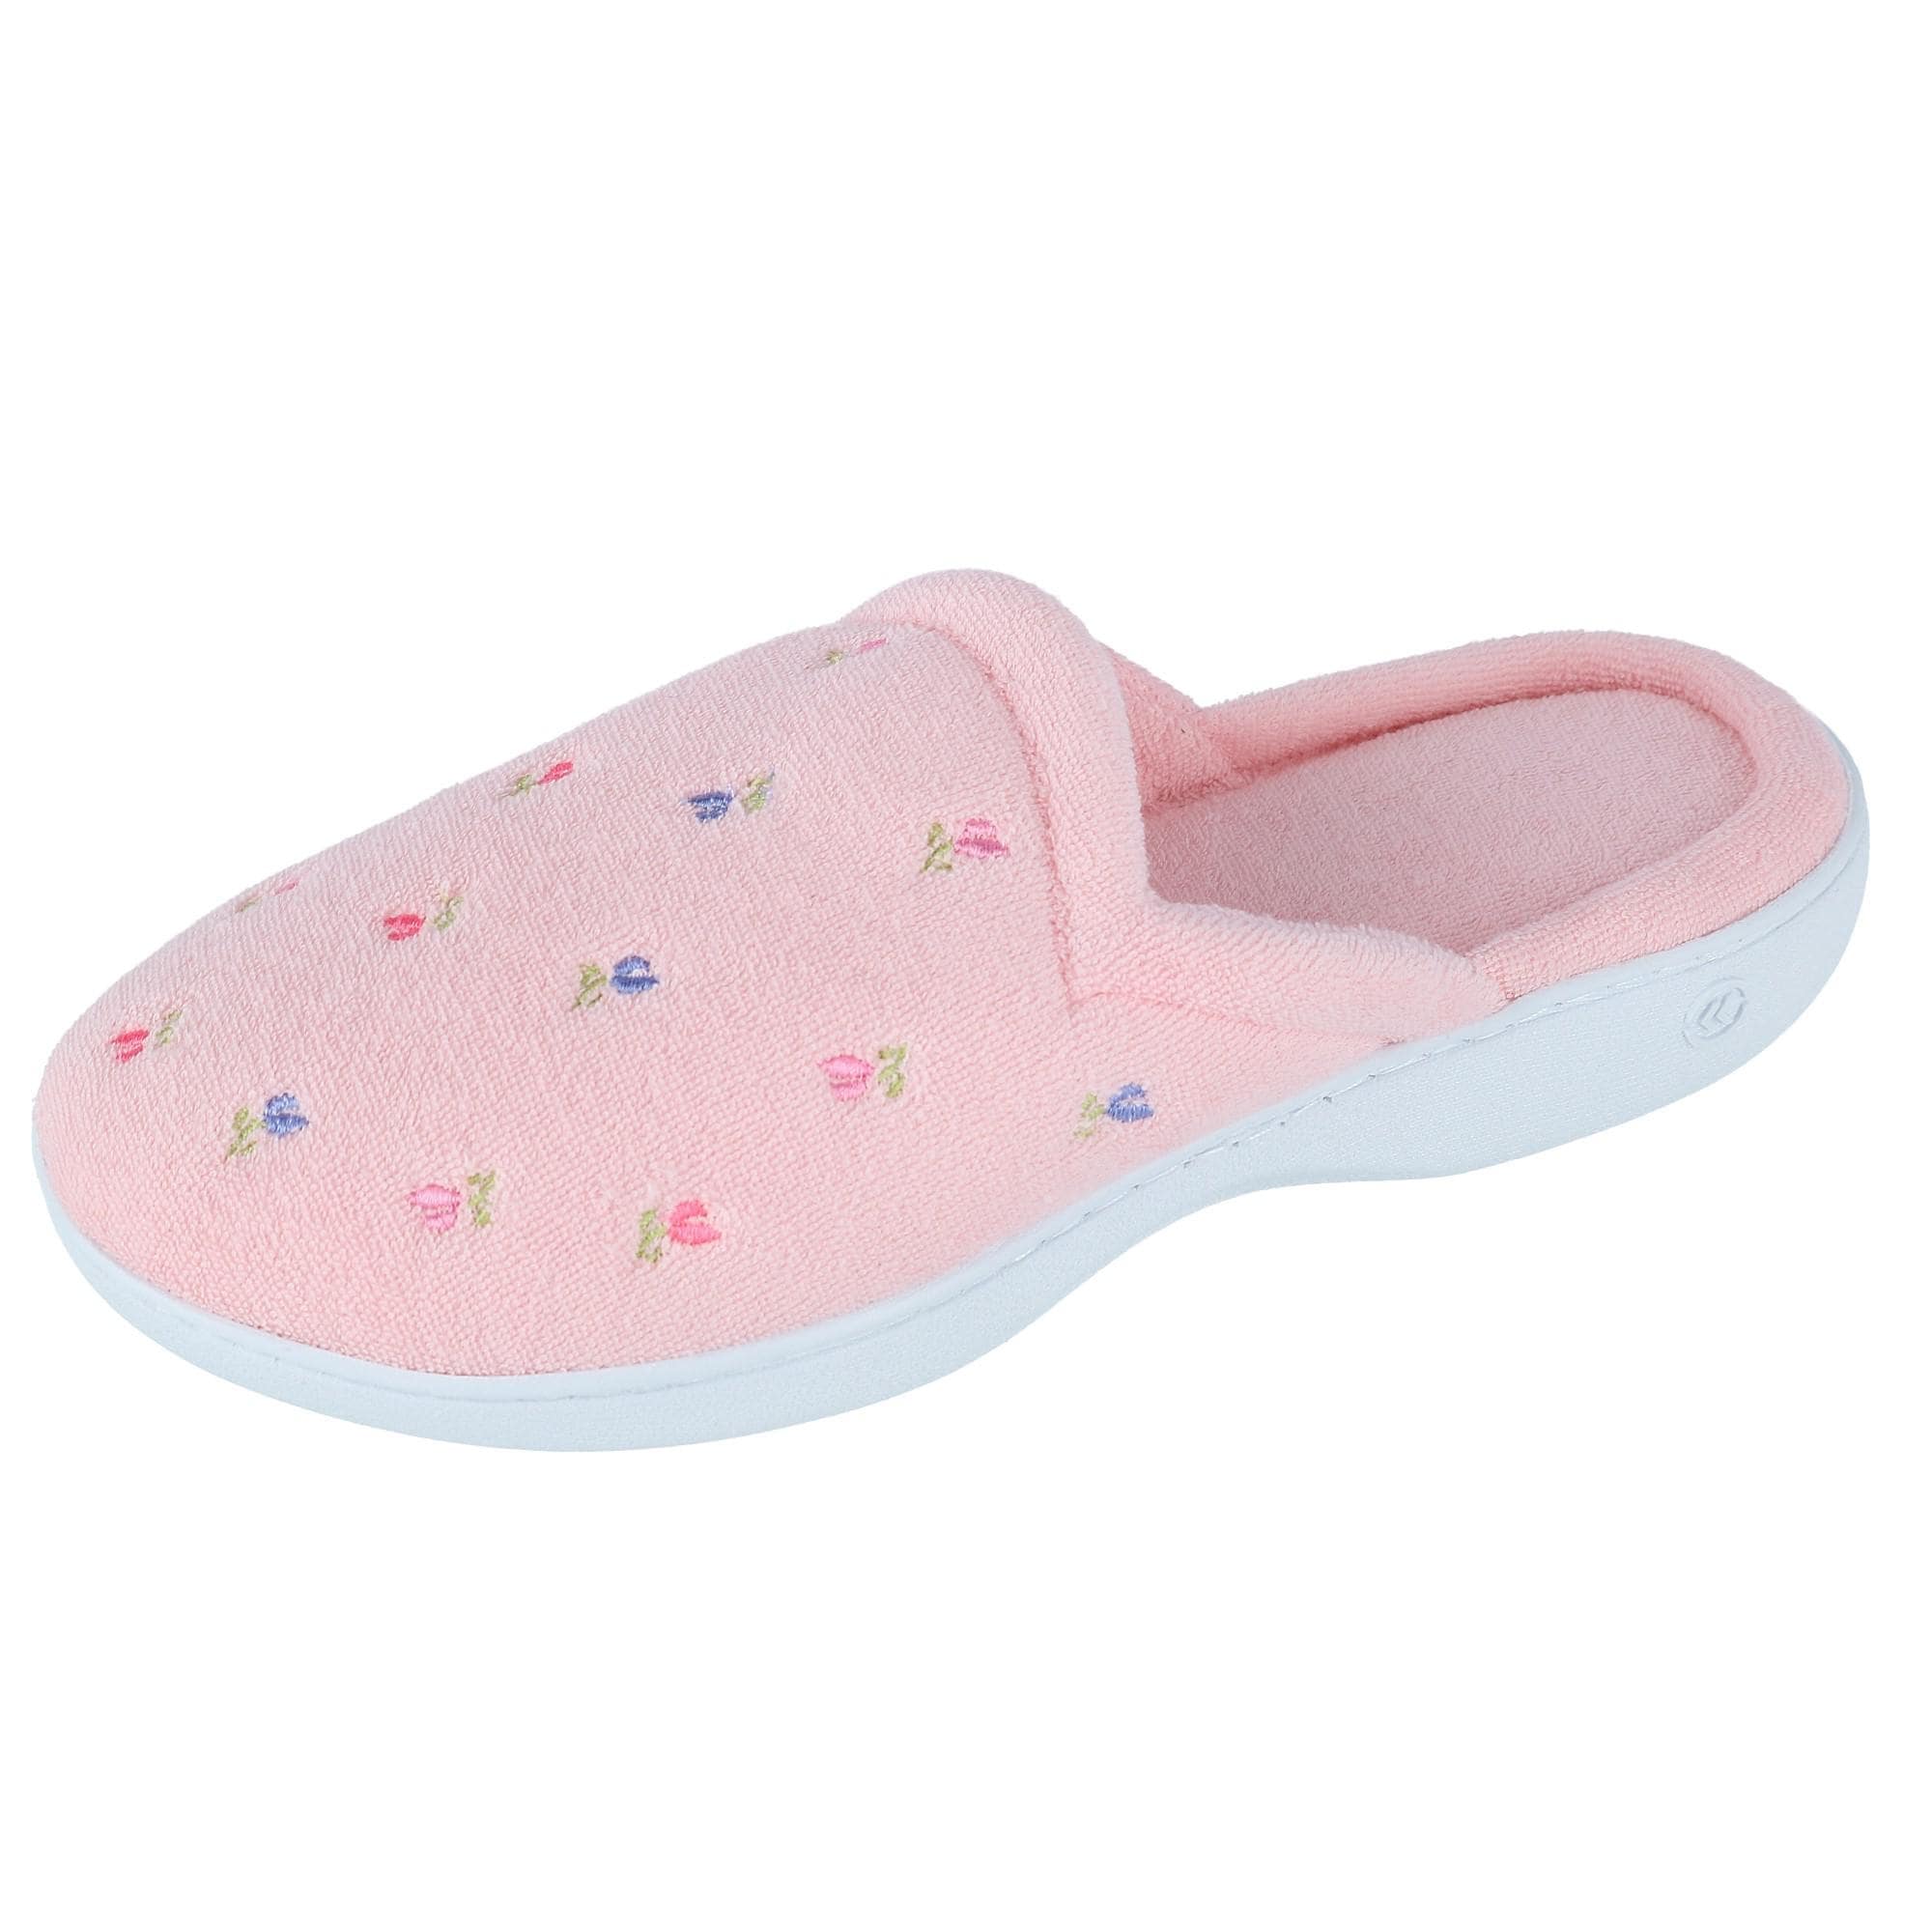 women's isotoner slippers on sale